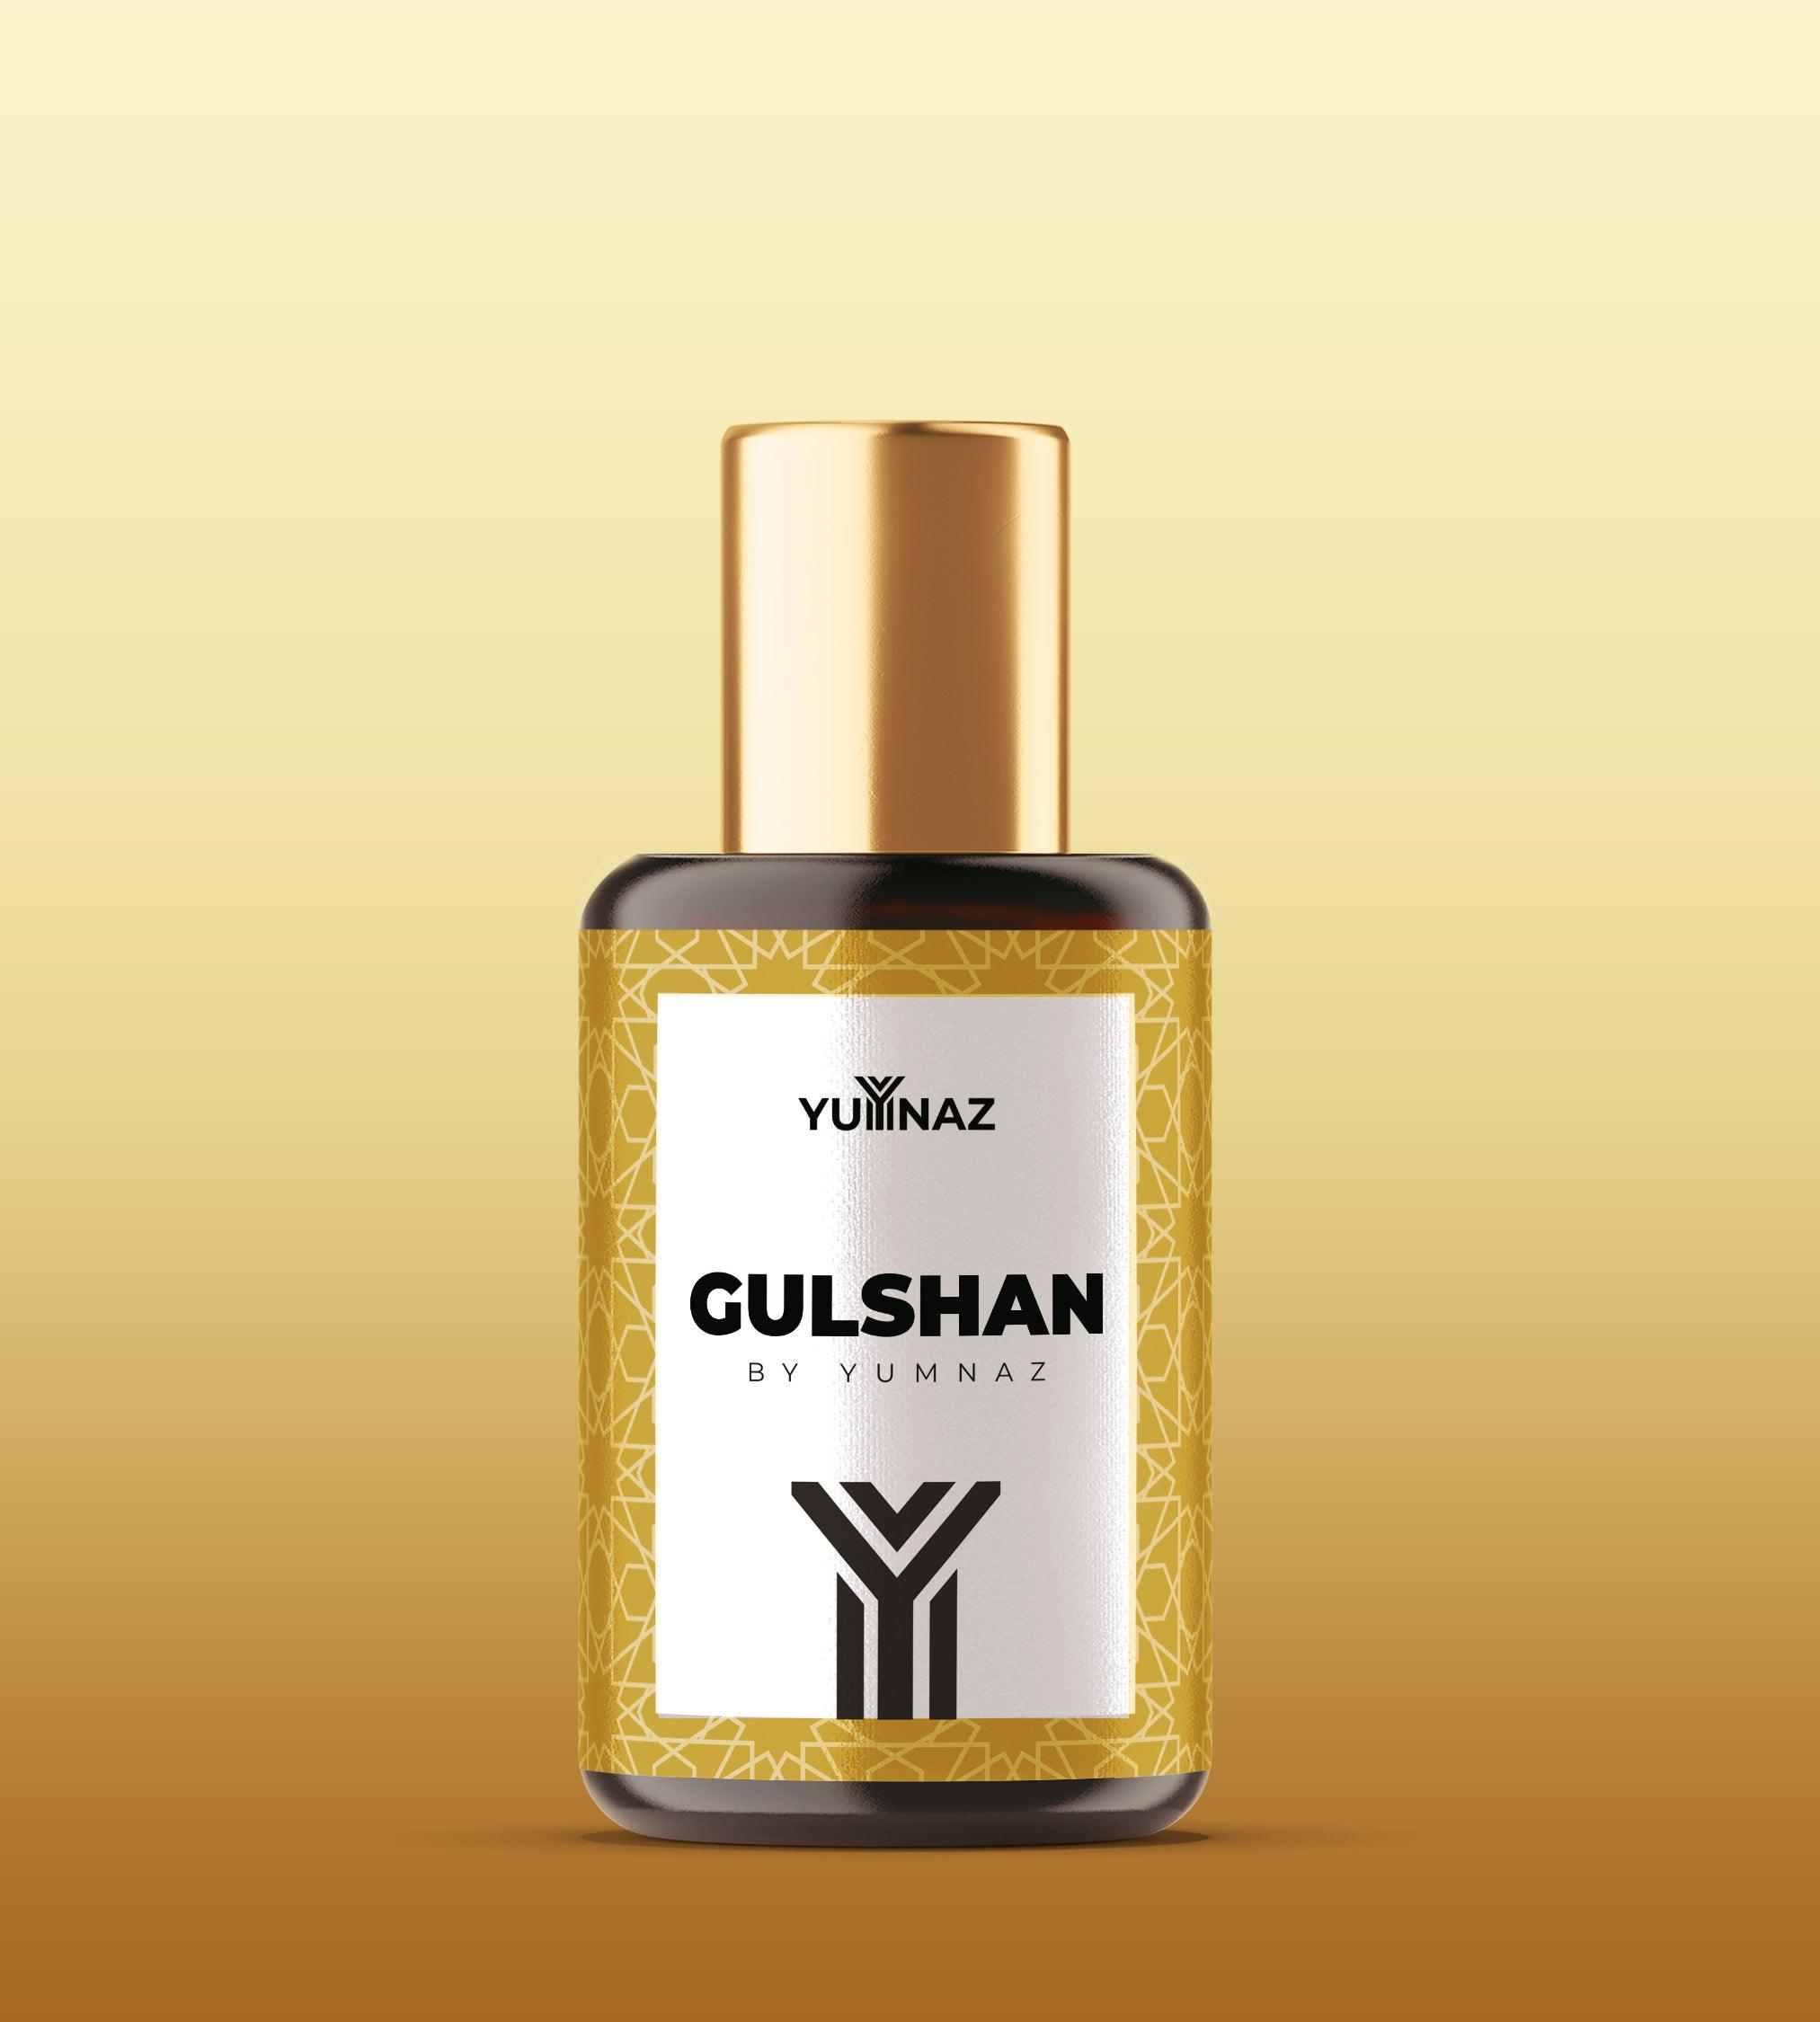 Discover Yumnaz Gulshan: Perfume Price in Pakistan & More